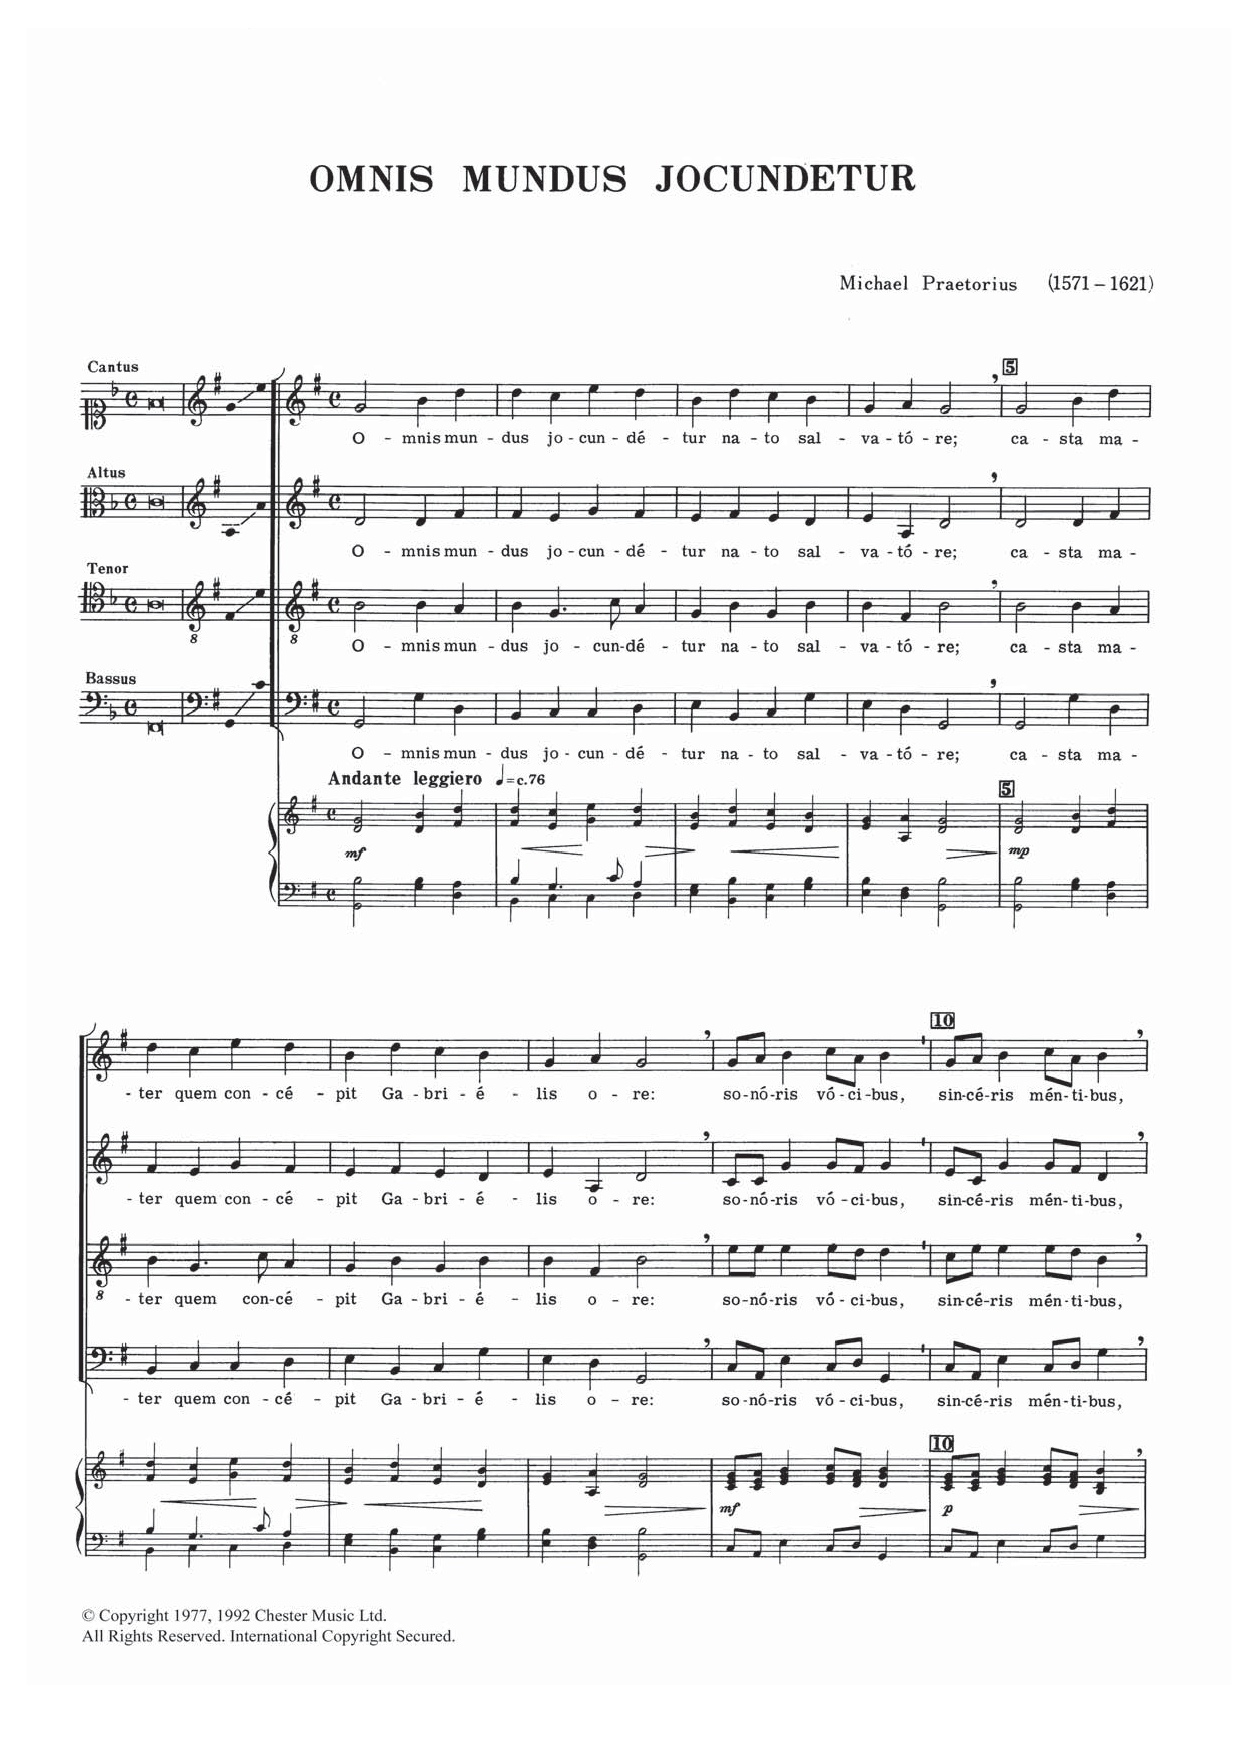 Michael Praetorius Omnis Mundus Jocundetur Sheet Music Notes & Chords for SATB - Download or Print PDF